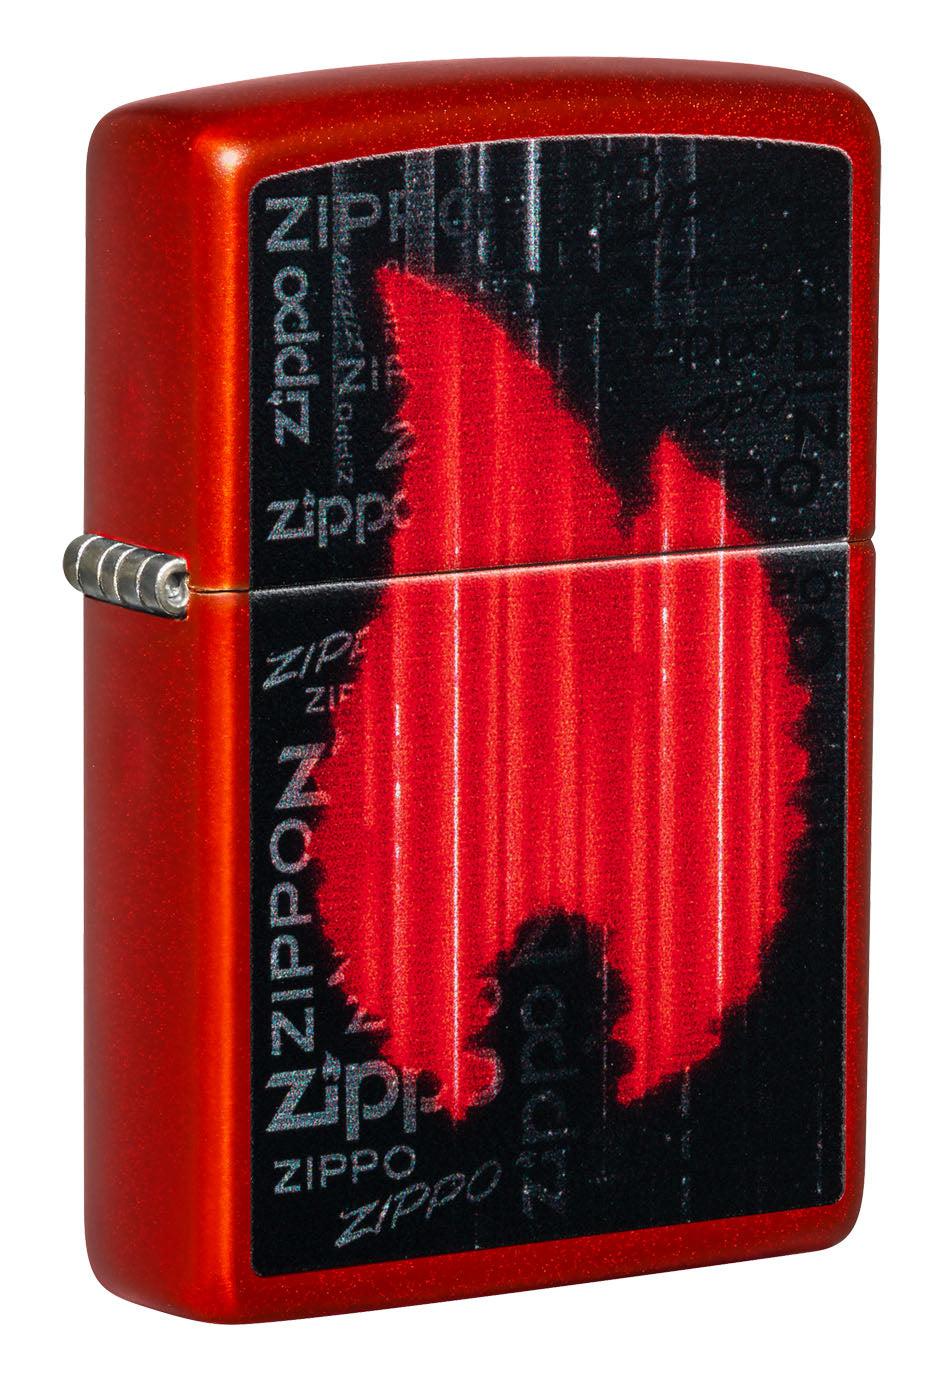 Zippo Lighter: Zippo Flame Design - Metallic Red 49584